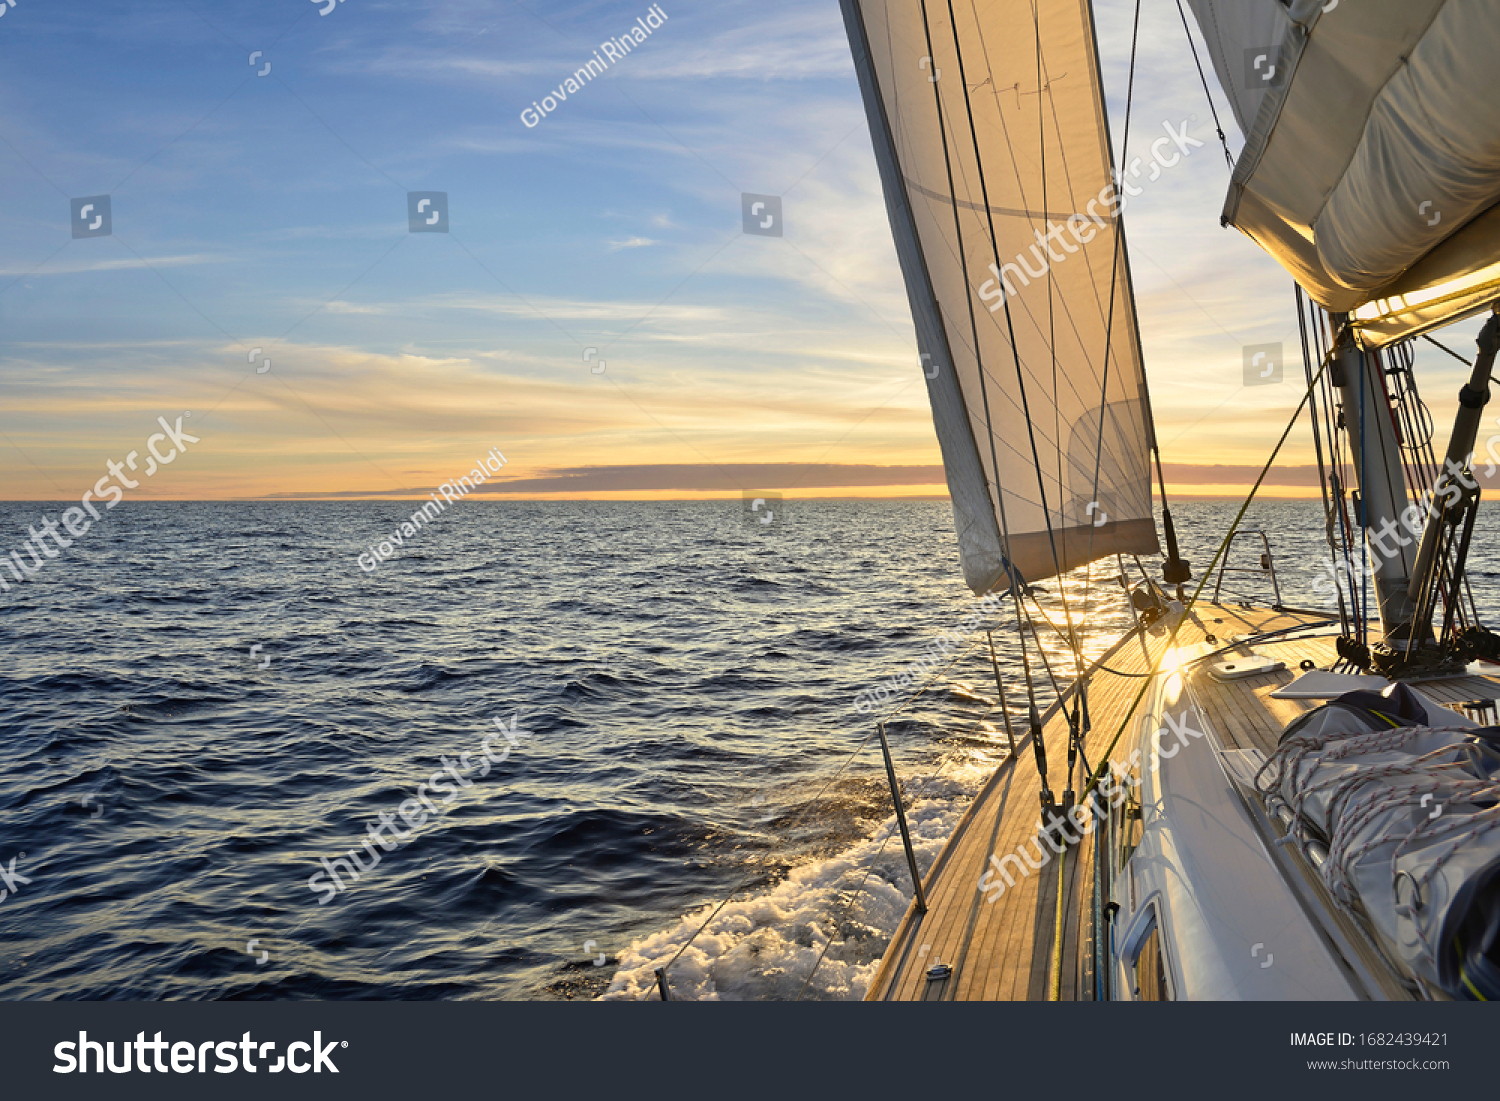 Sailboat sailing in the Mediterranean Sea at sunset #1682439421